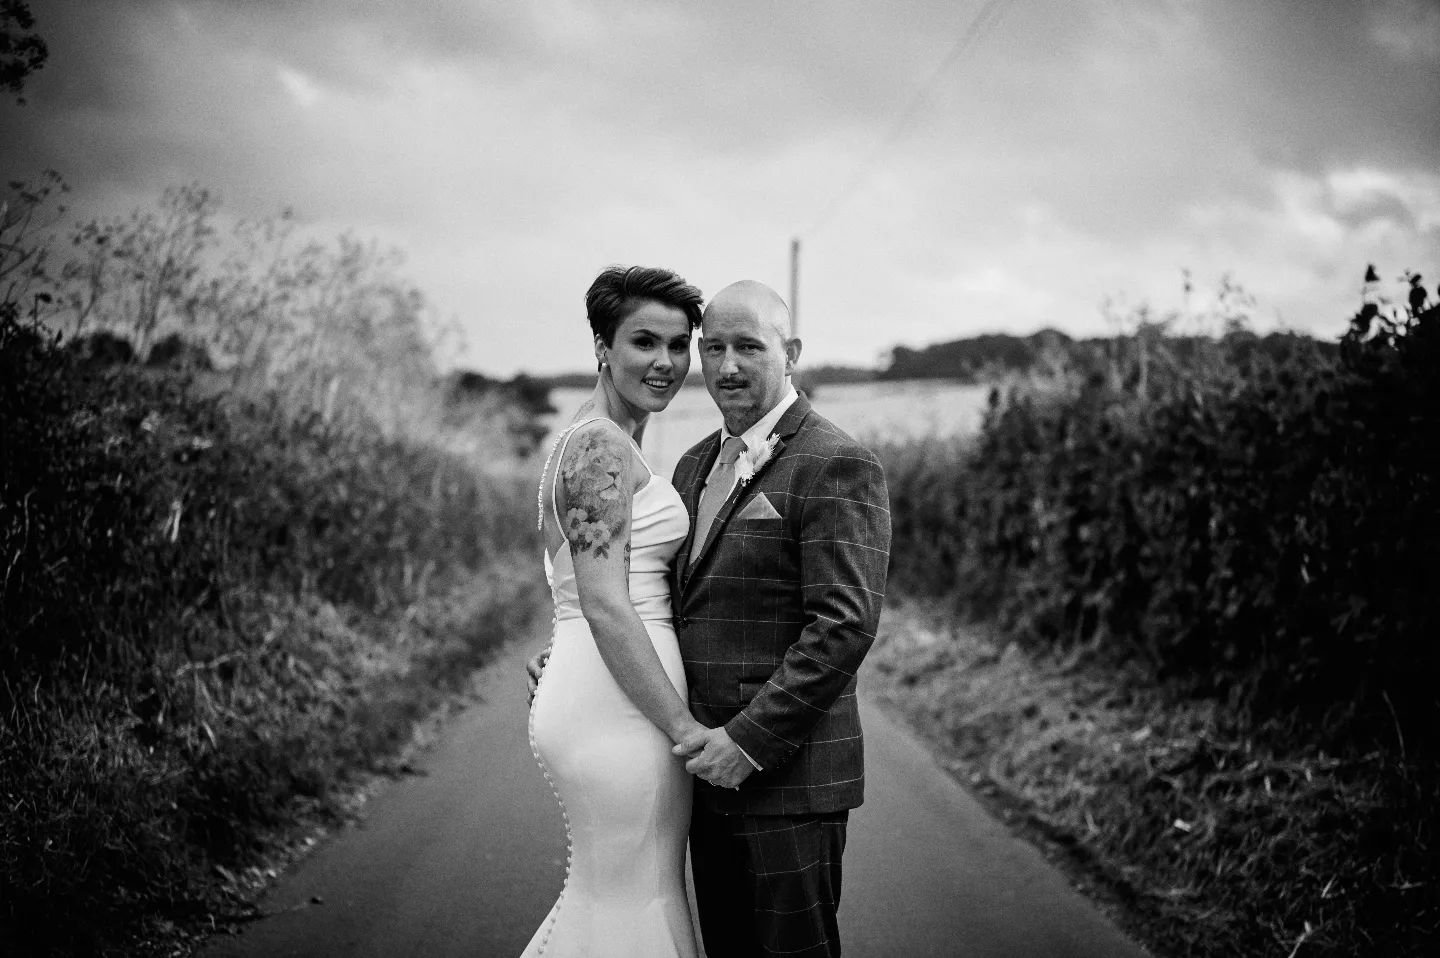 Gorgeous wedding days at Lodge Farm 🥰
@lodgefarm_events 
.
.
.
.
.
.
.
.
.
.
#hertfordshireweddingphotographer #hertfordshireweddingvenue #hitchinweddingphotographer #hitchinweddingvenue #lodgefarmwedding #outdoorwedding #tipiwedding
#pikephotograph